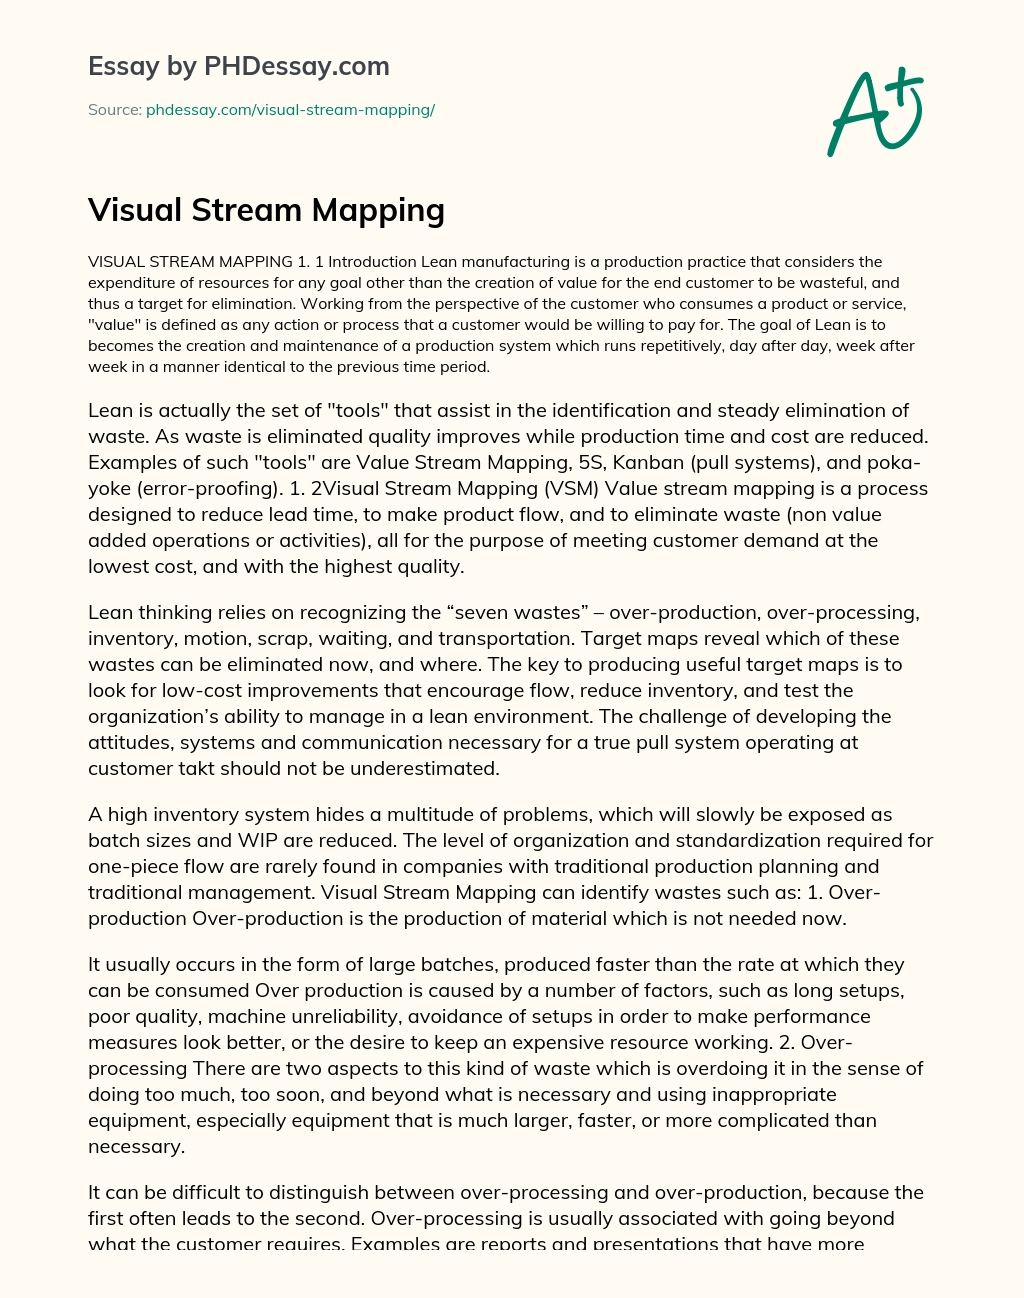 Visual Stream Mapping essay